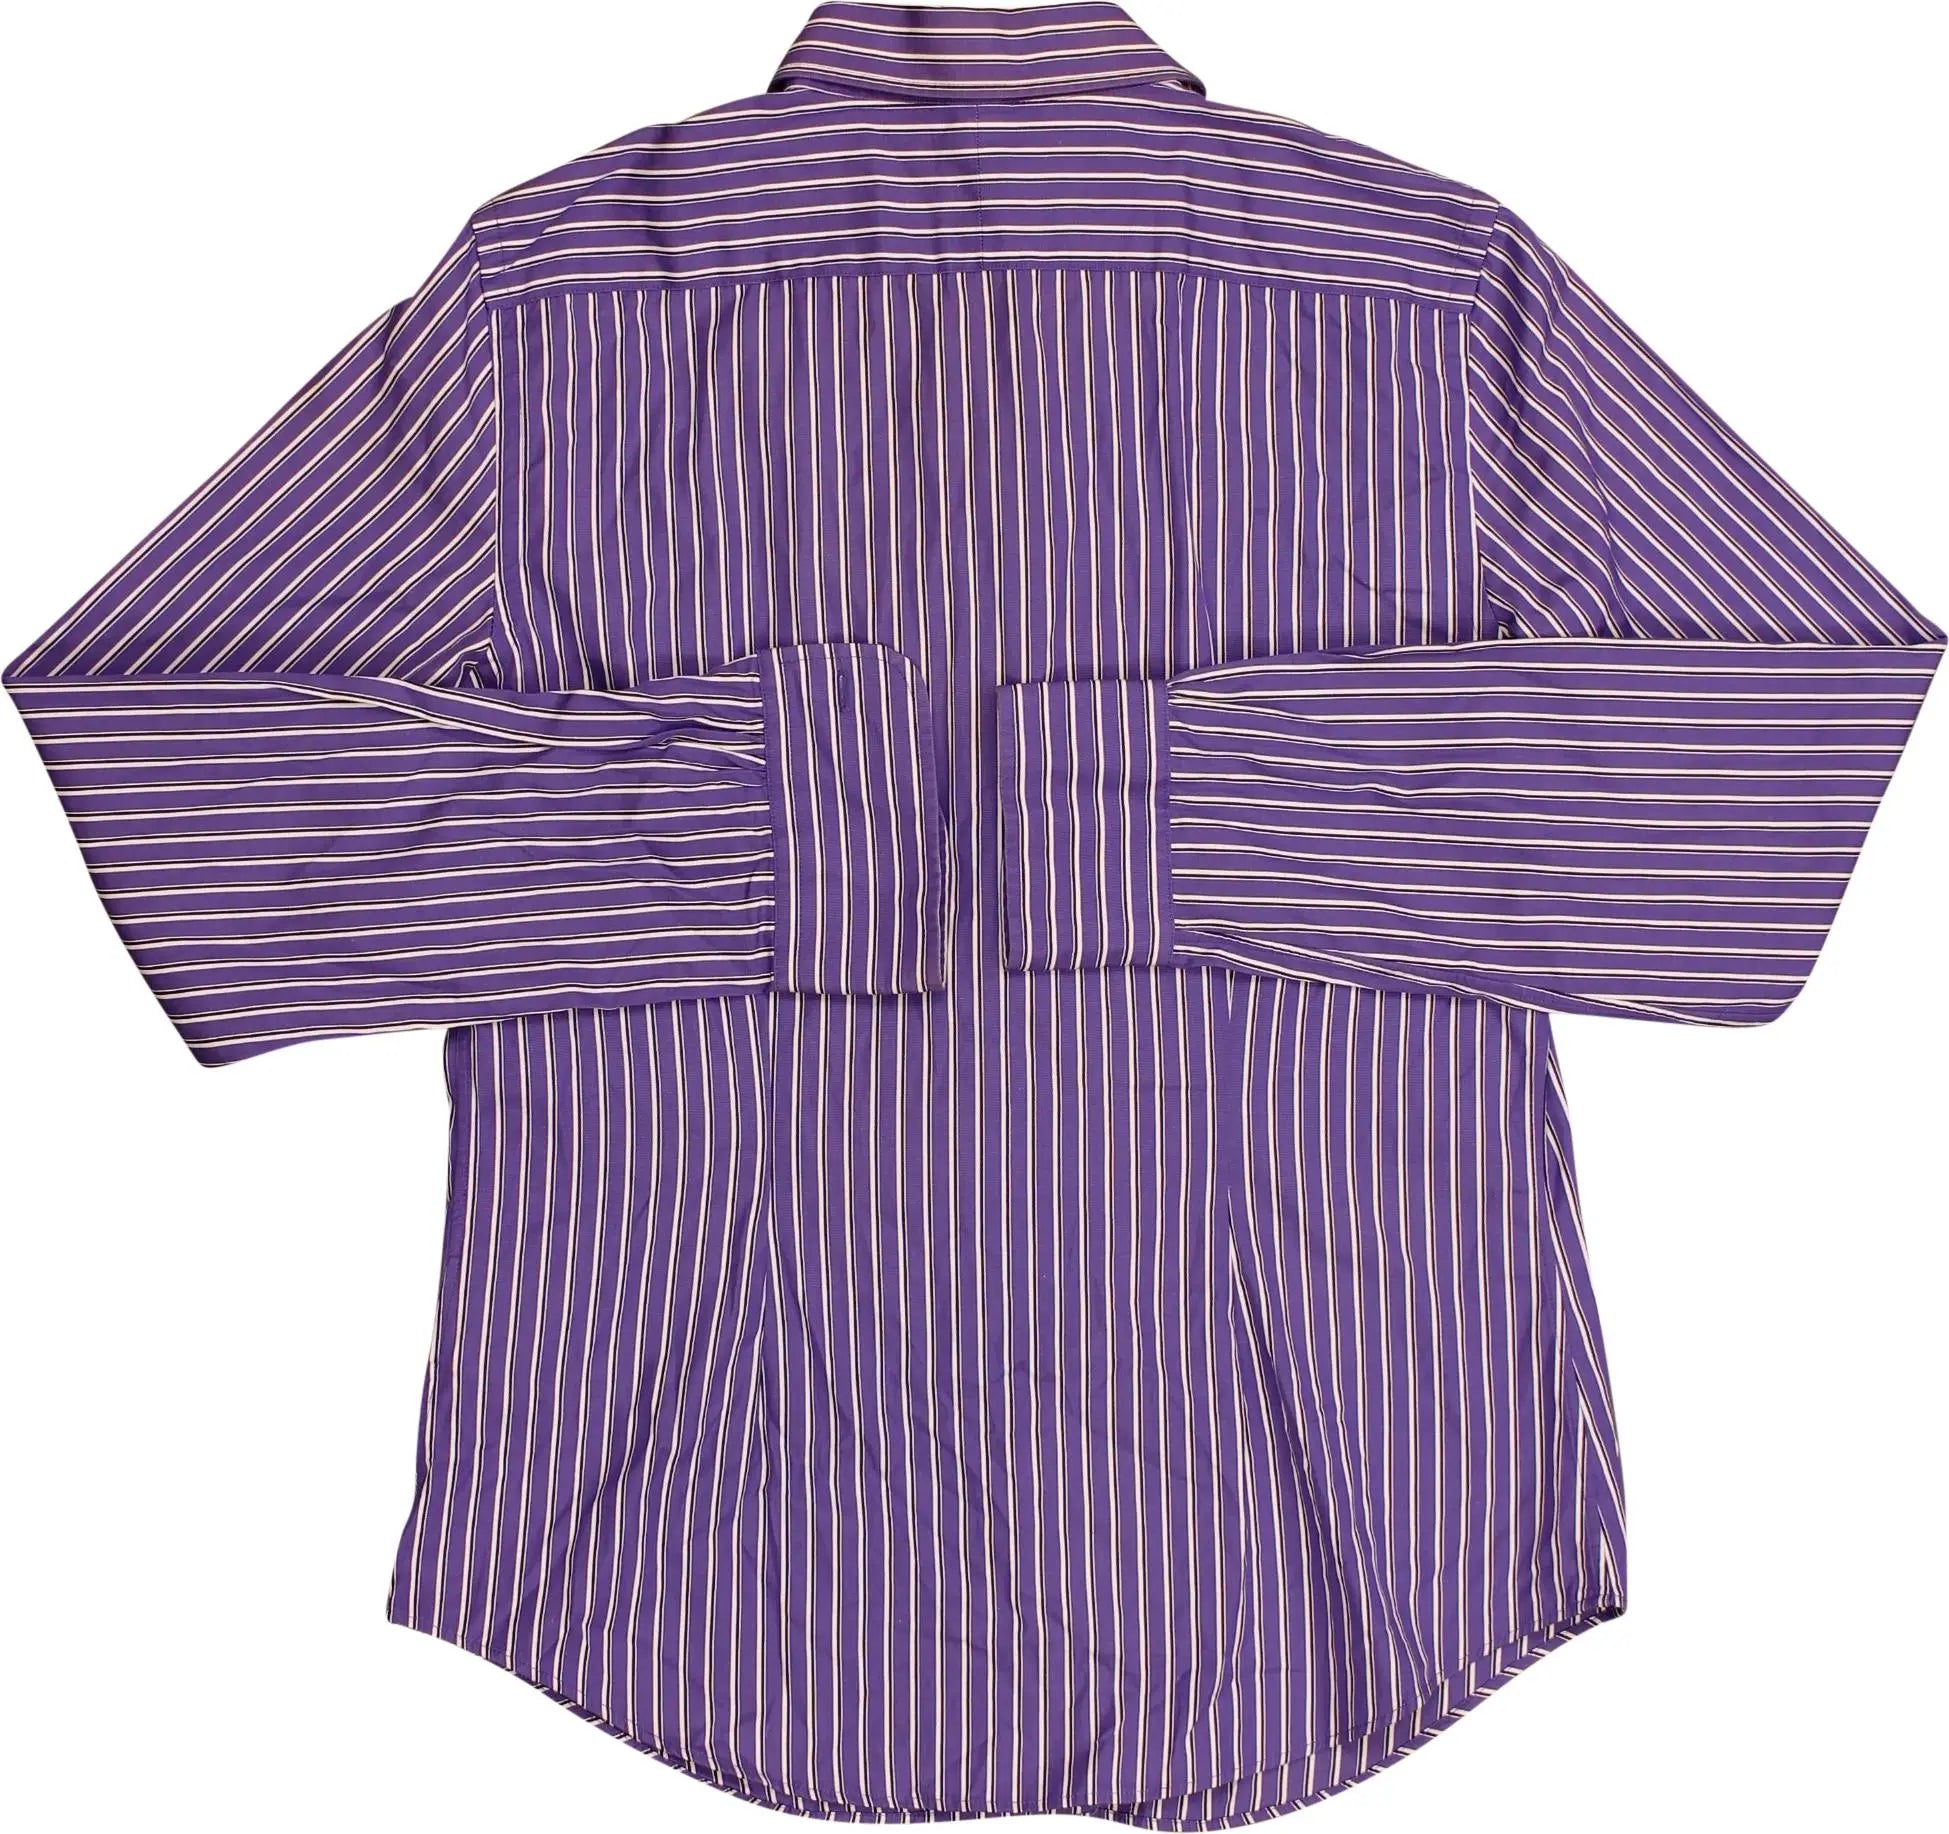 Ralph Lauren - Purple Striped Blouse by Ralph Lauren- ThriftTale.com - Vintage and second handclothing